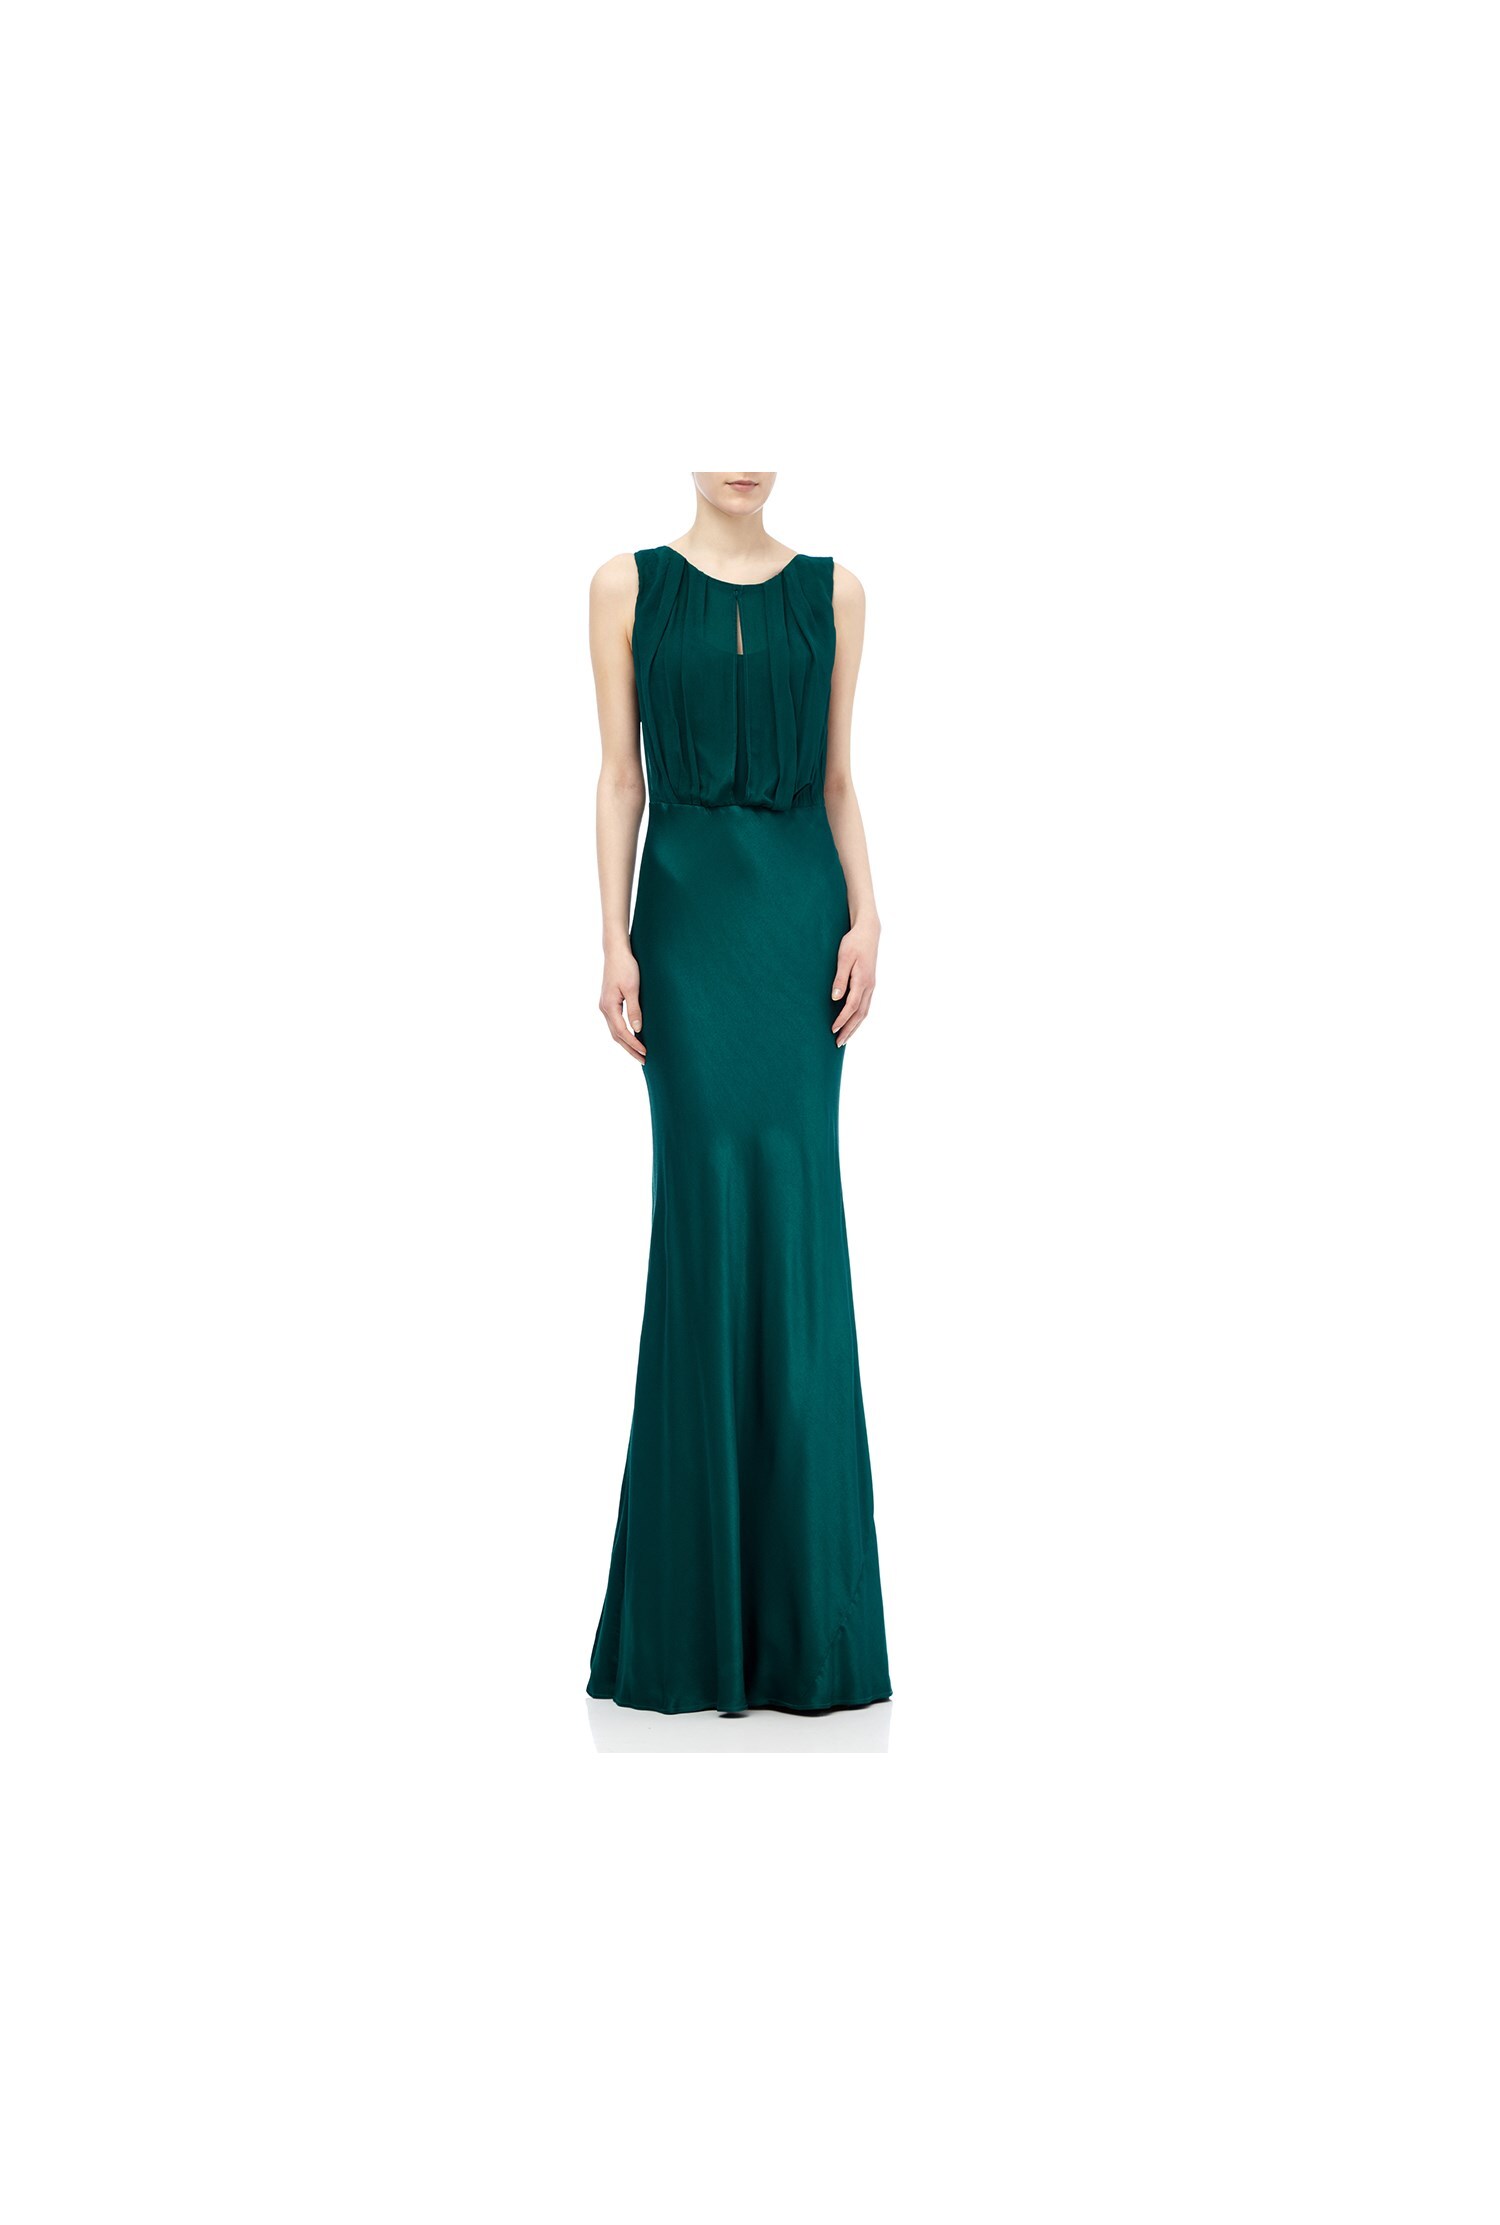 ghost claudia dress emerald